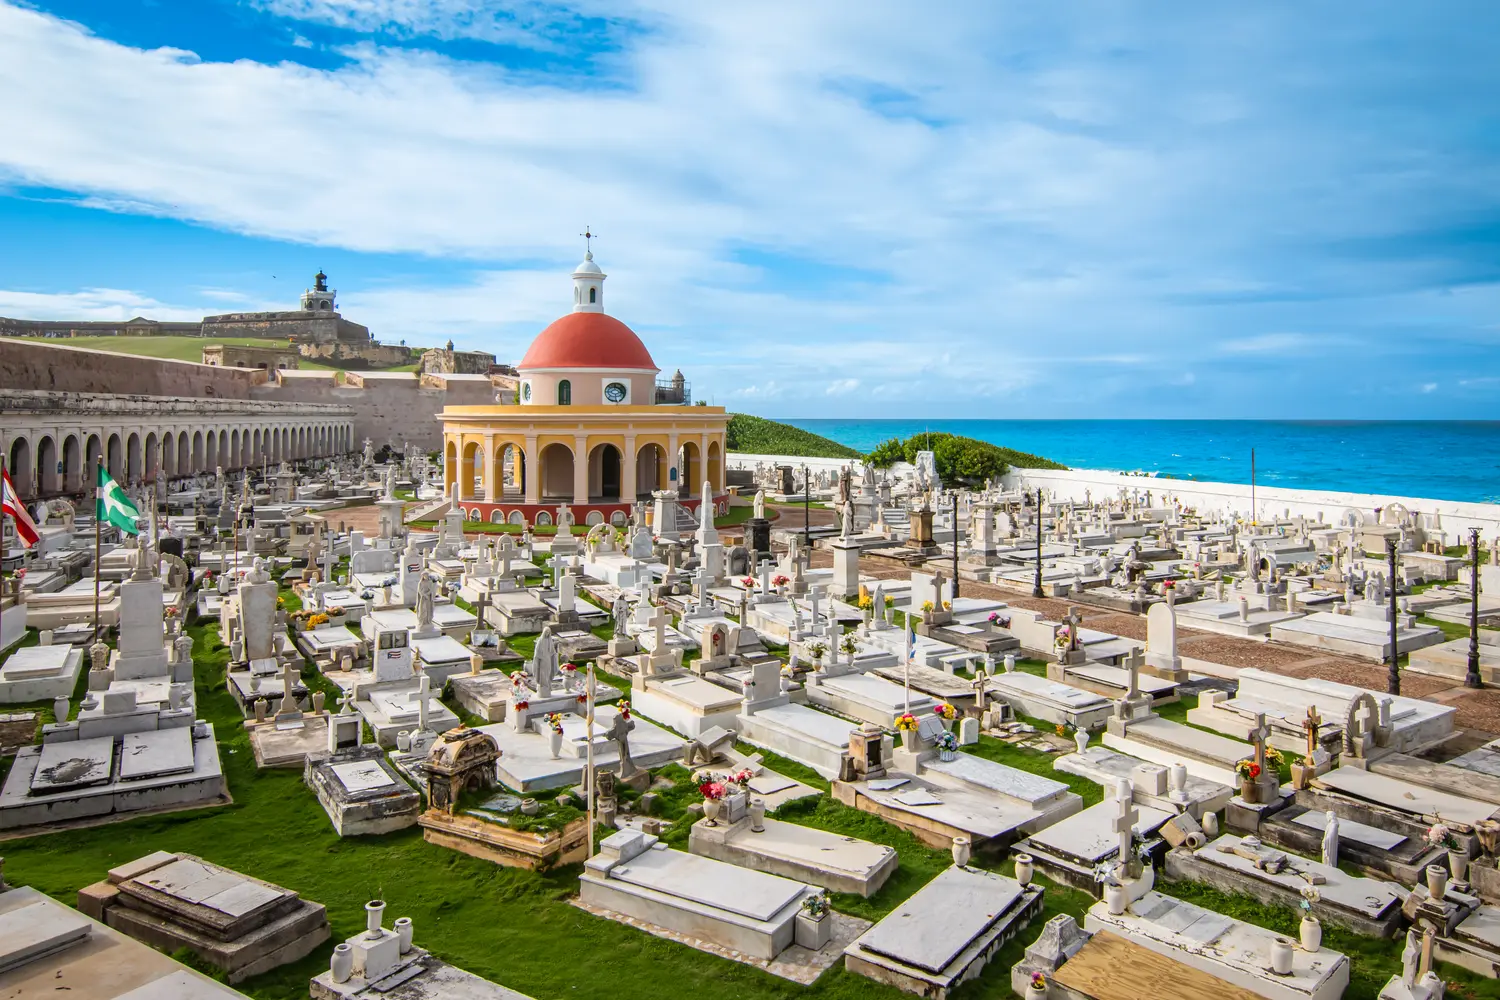 Santa María Magdalena de Pazzis Cemetery in Old San Juan, Puerto Rico.